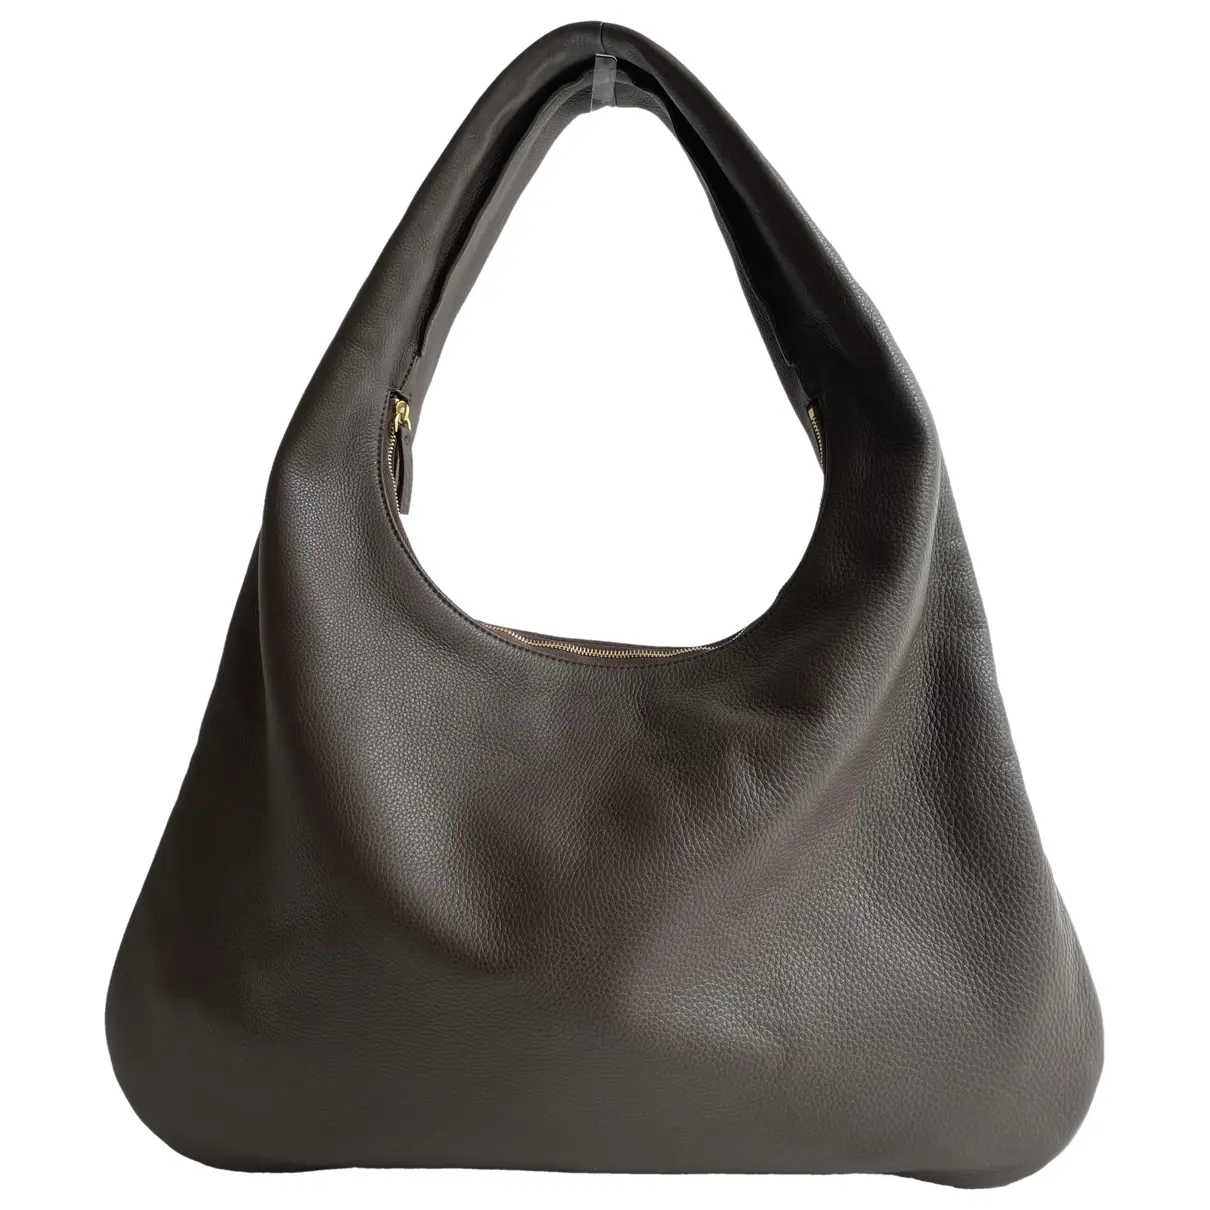 Everyday leather handbag